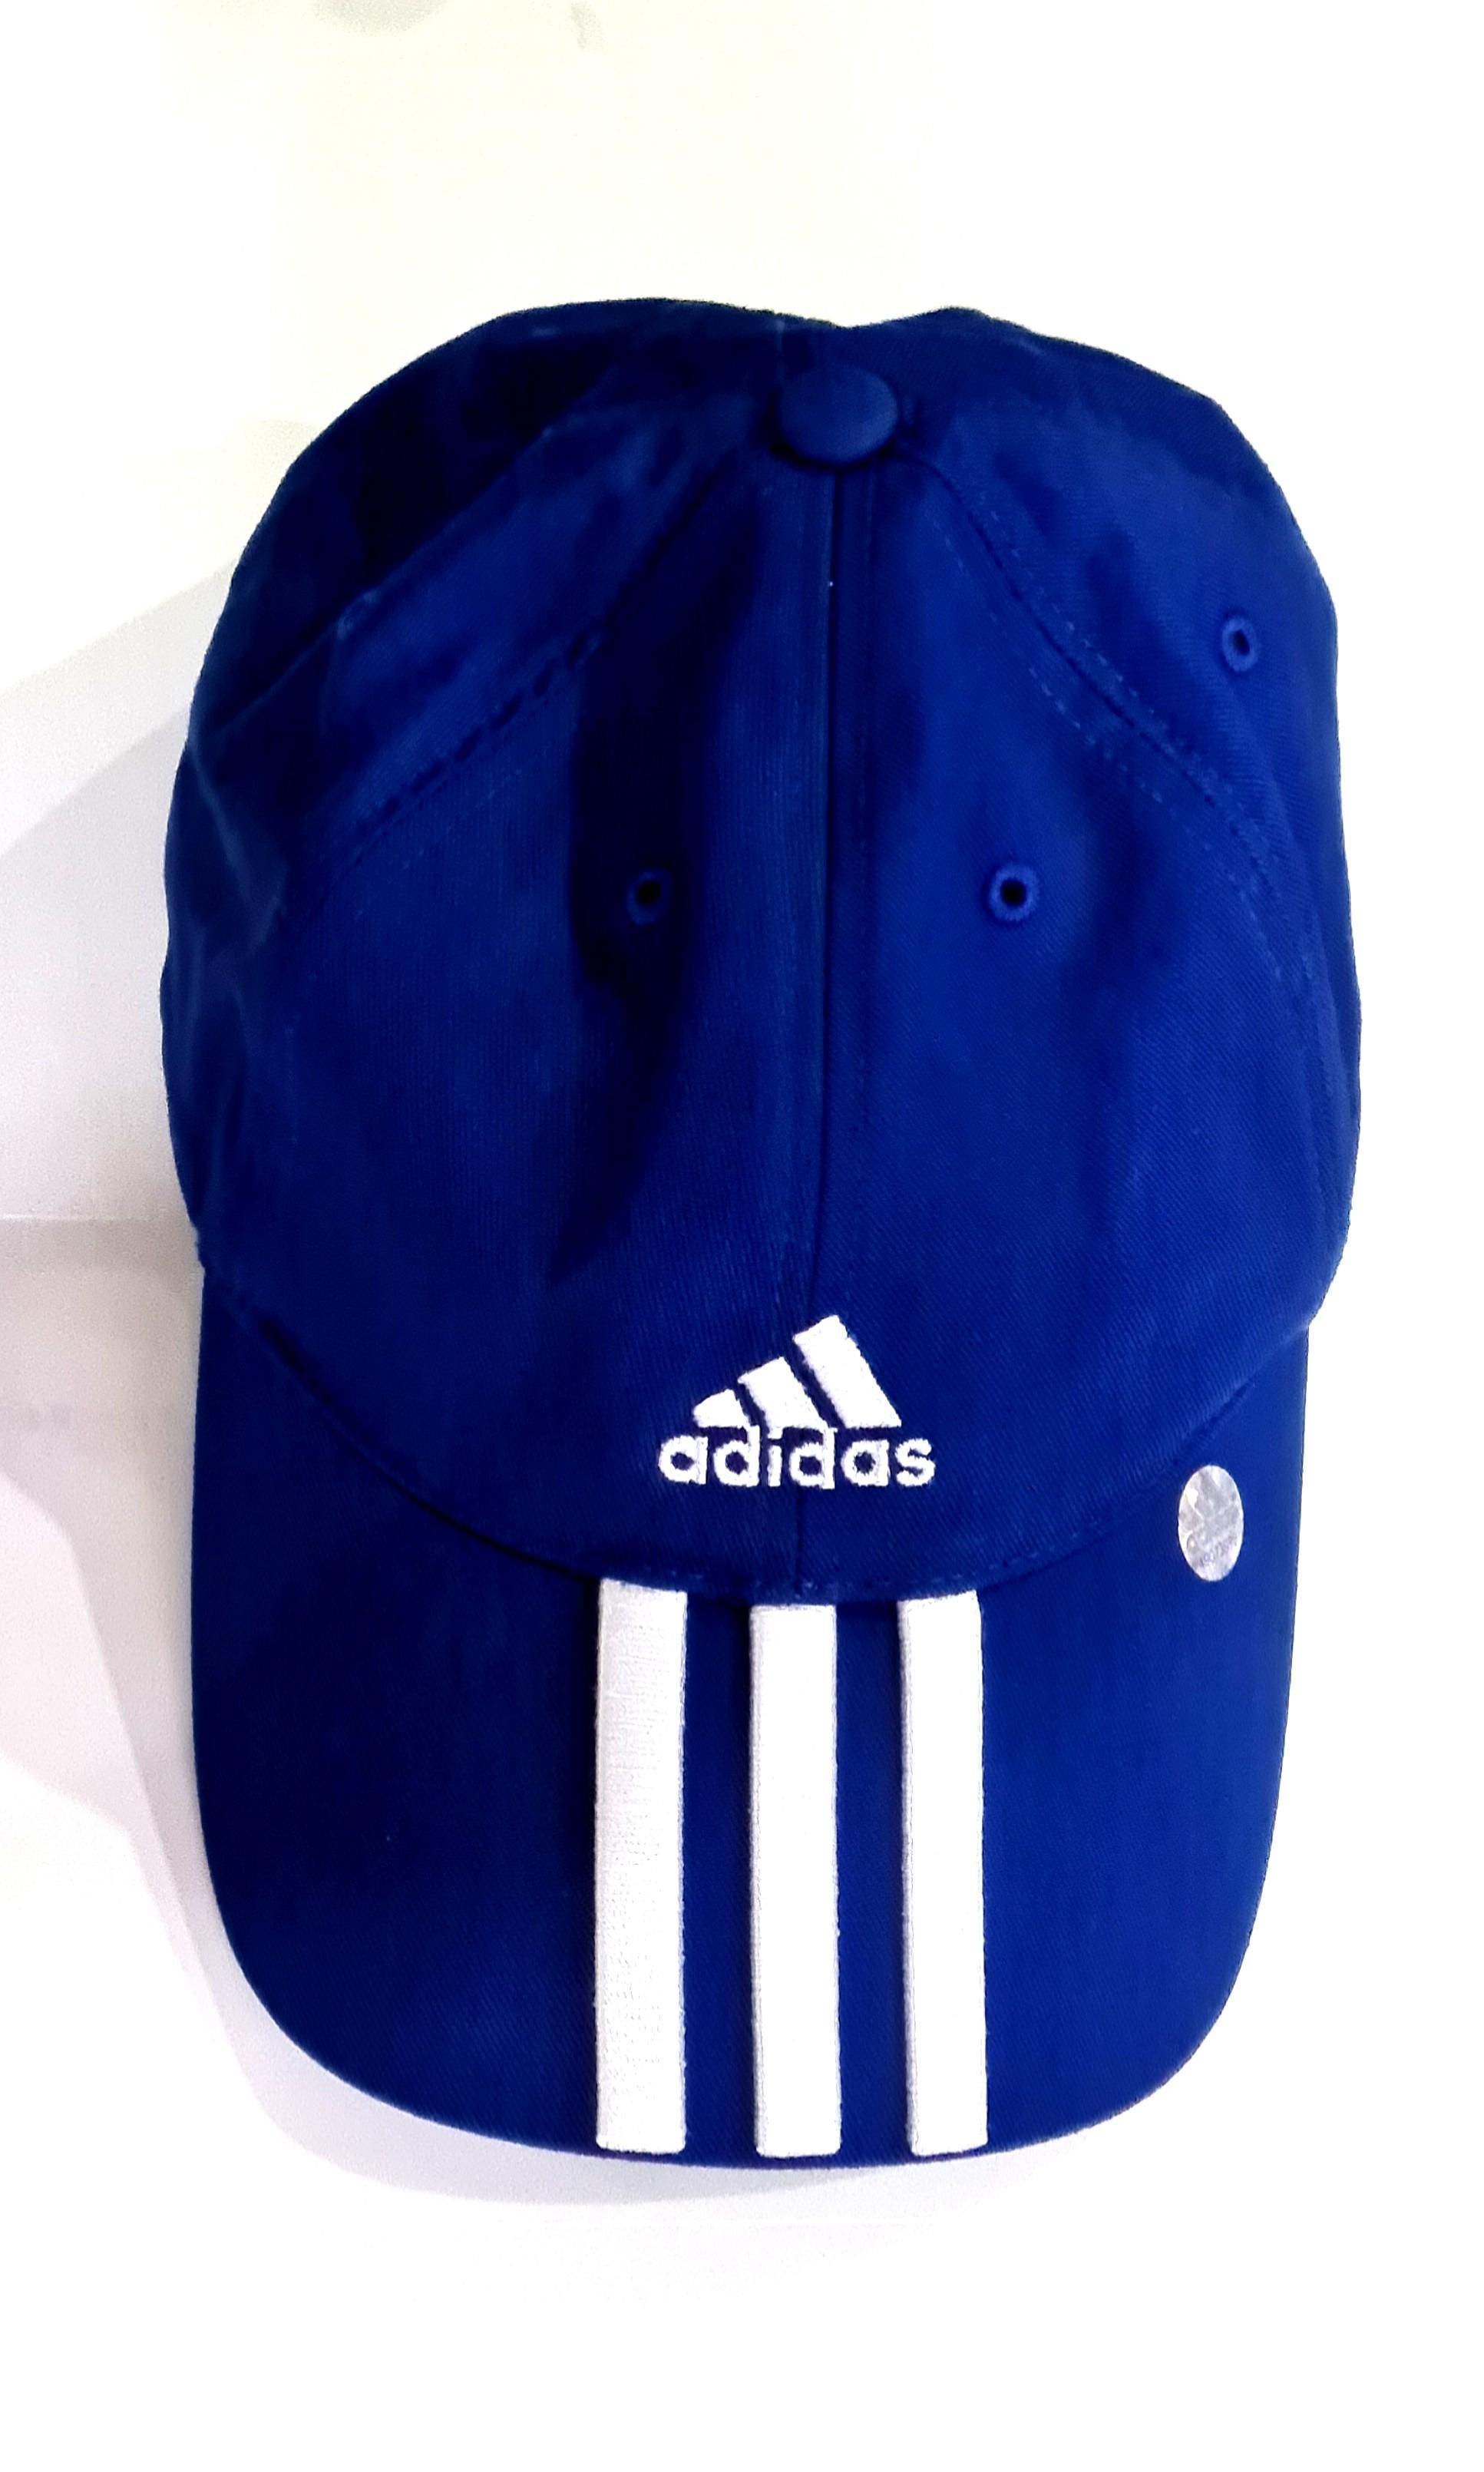 Adidas cap/ Adidas blue cap/hat, Men's Fashion, Watches & Accessories ...